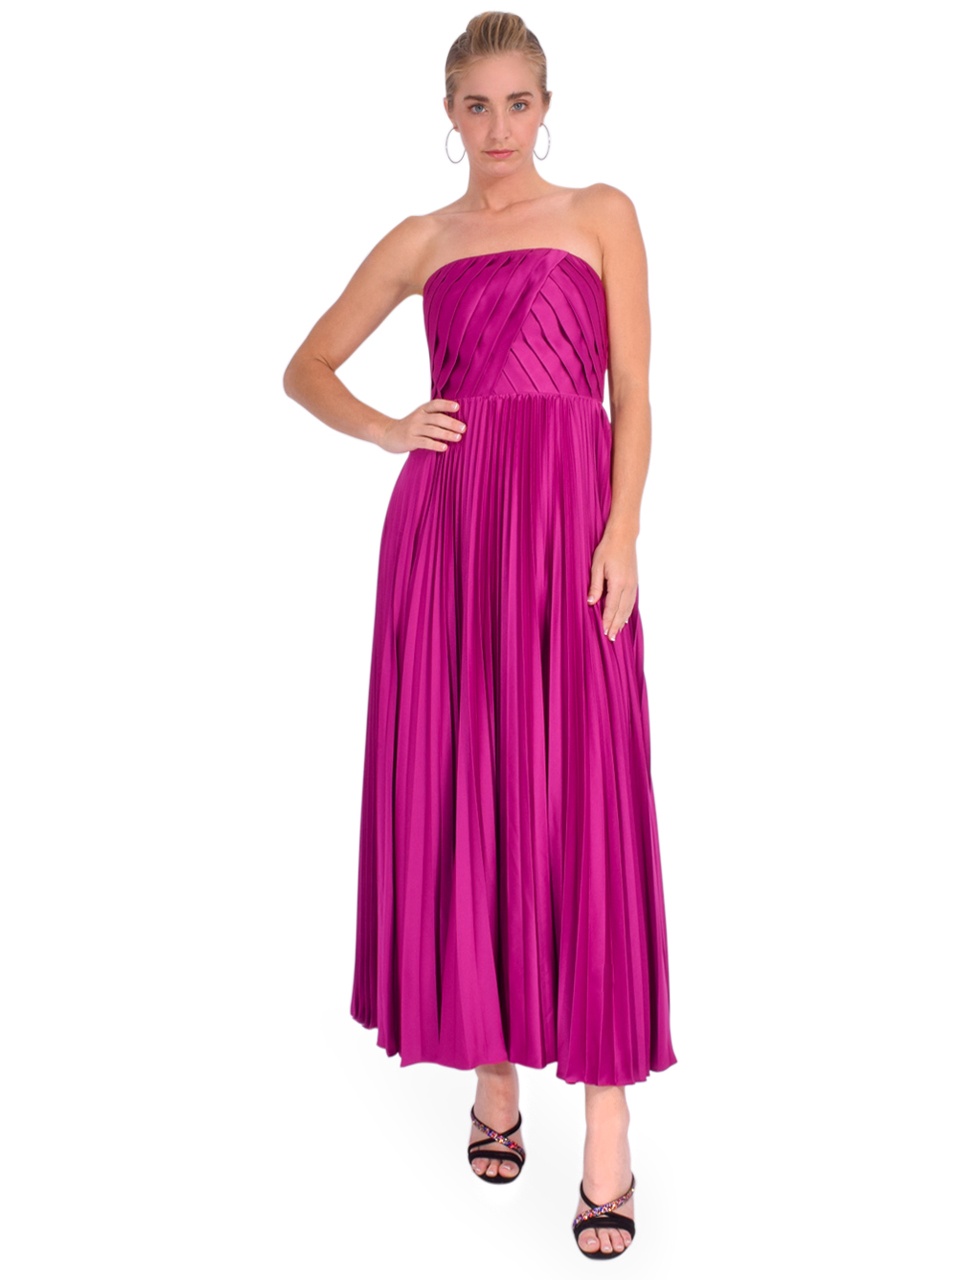 AMUR Conan Strapless Dress in Purple Sangria Front View 1